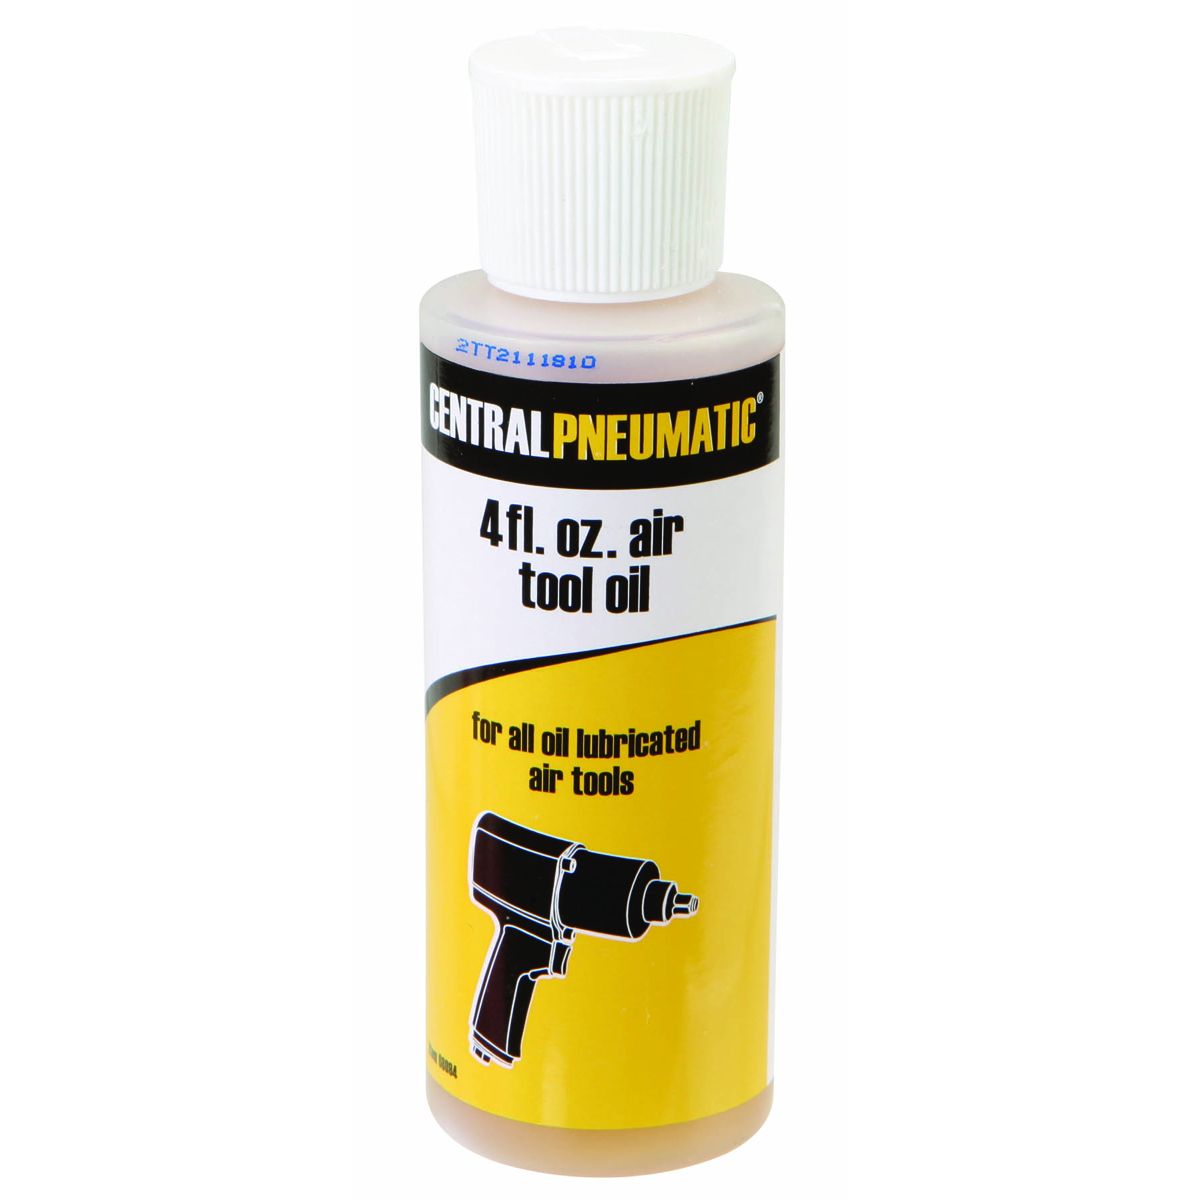 CENTRAL PNEUMATIC 4 oz. Air Tool Oil